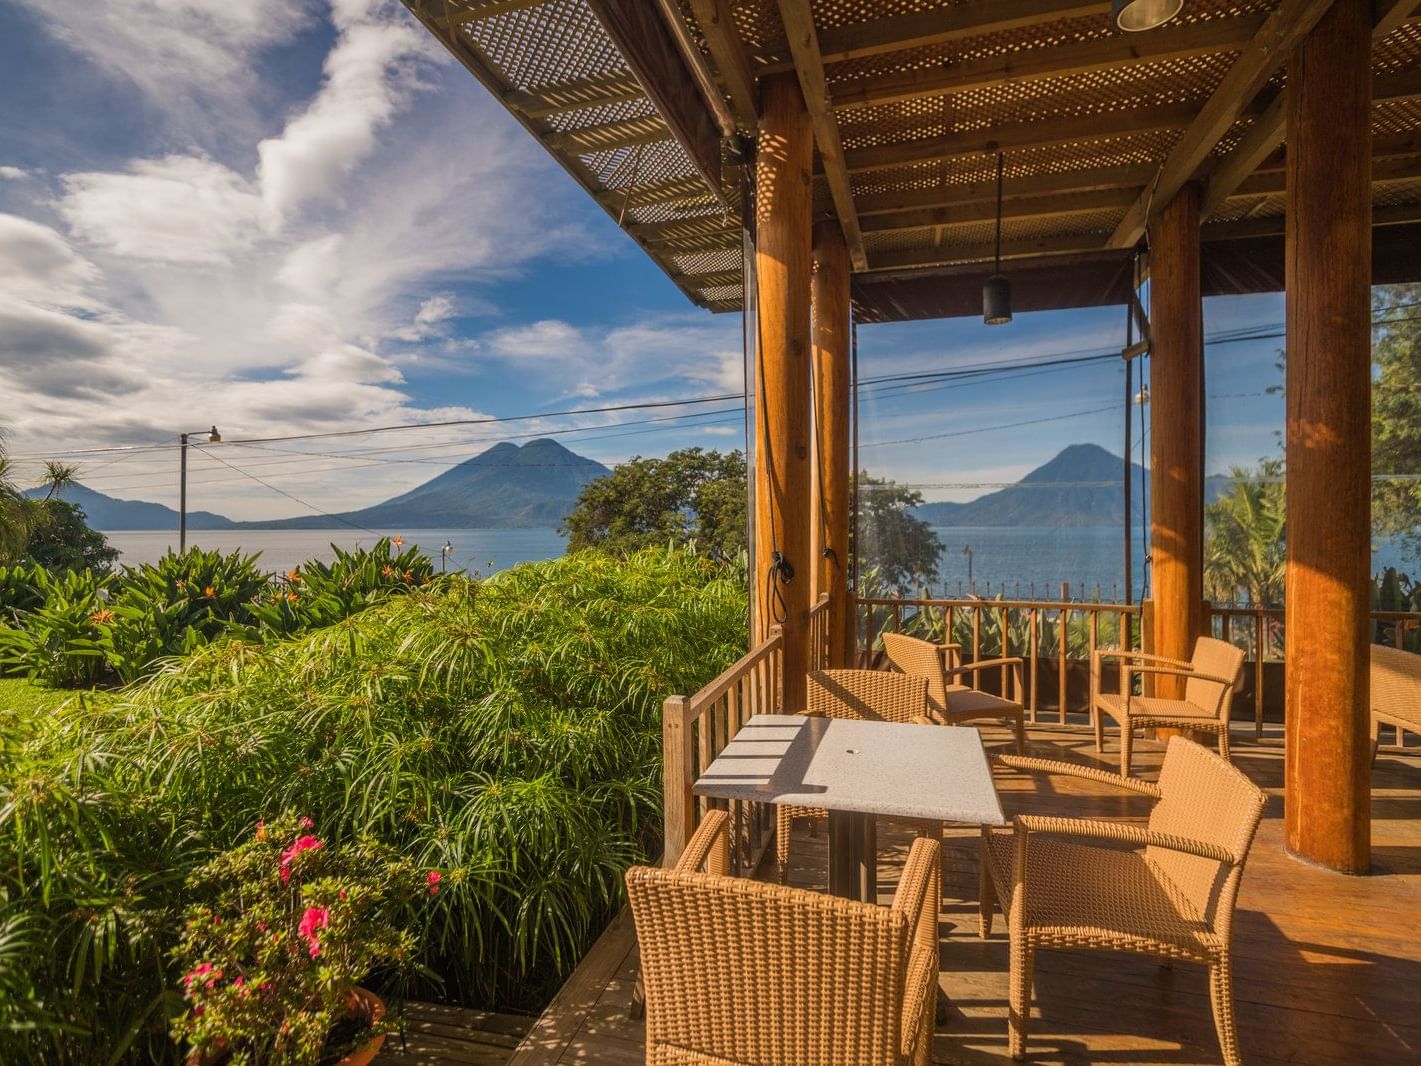 Outdoor patio with dining tables overlooking the mountain view in El Mirador Snack Bar at Porta Hotel del Lago